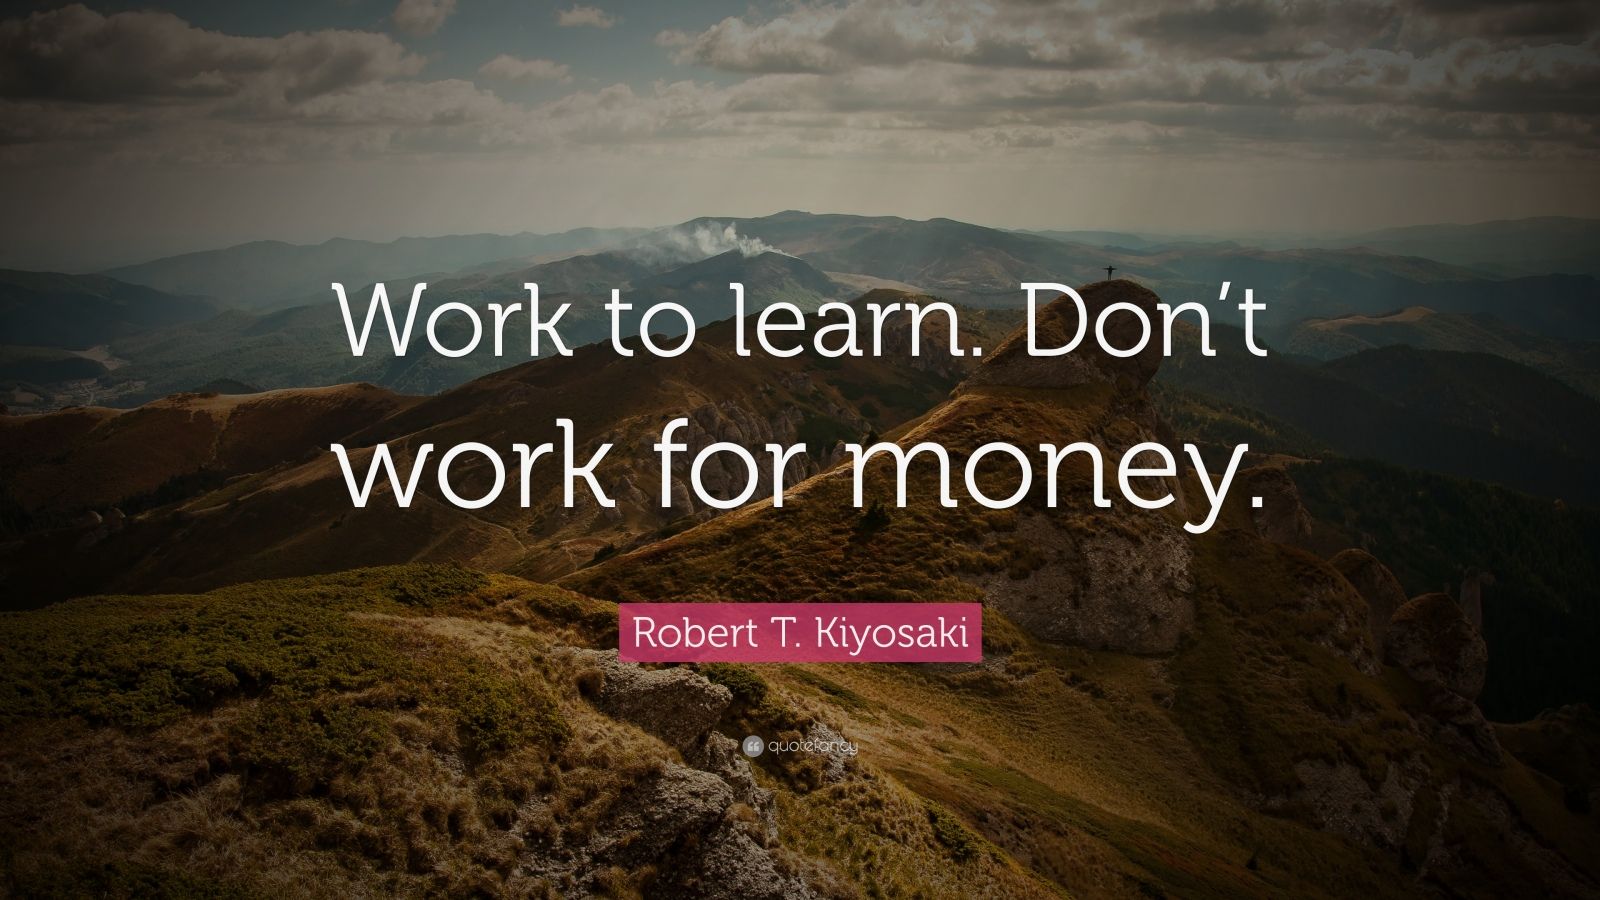 Robert T. Kiyosaki Quote: "Work to learn. Don't work for money." (12 wallpapers) - Quotefancy